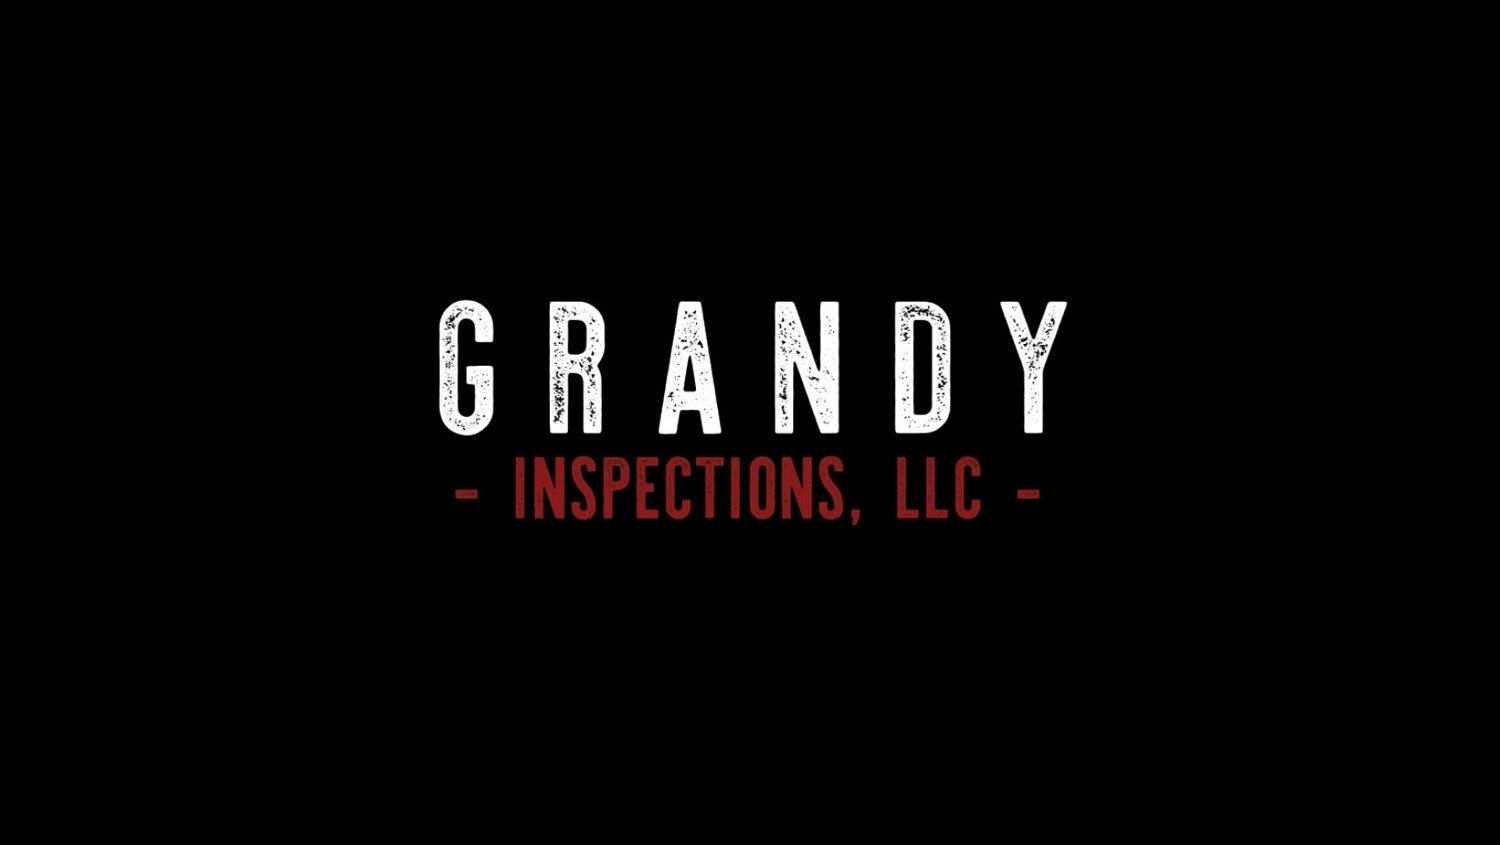 Grandy Inspections, LLC